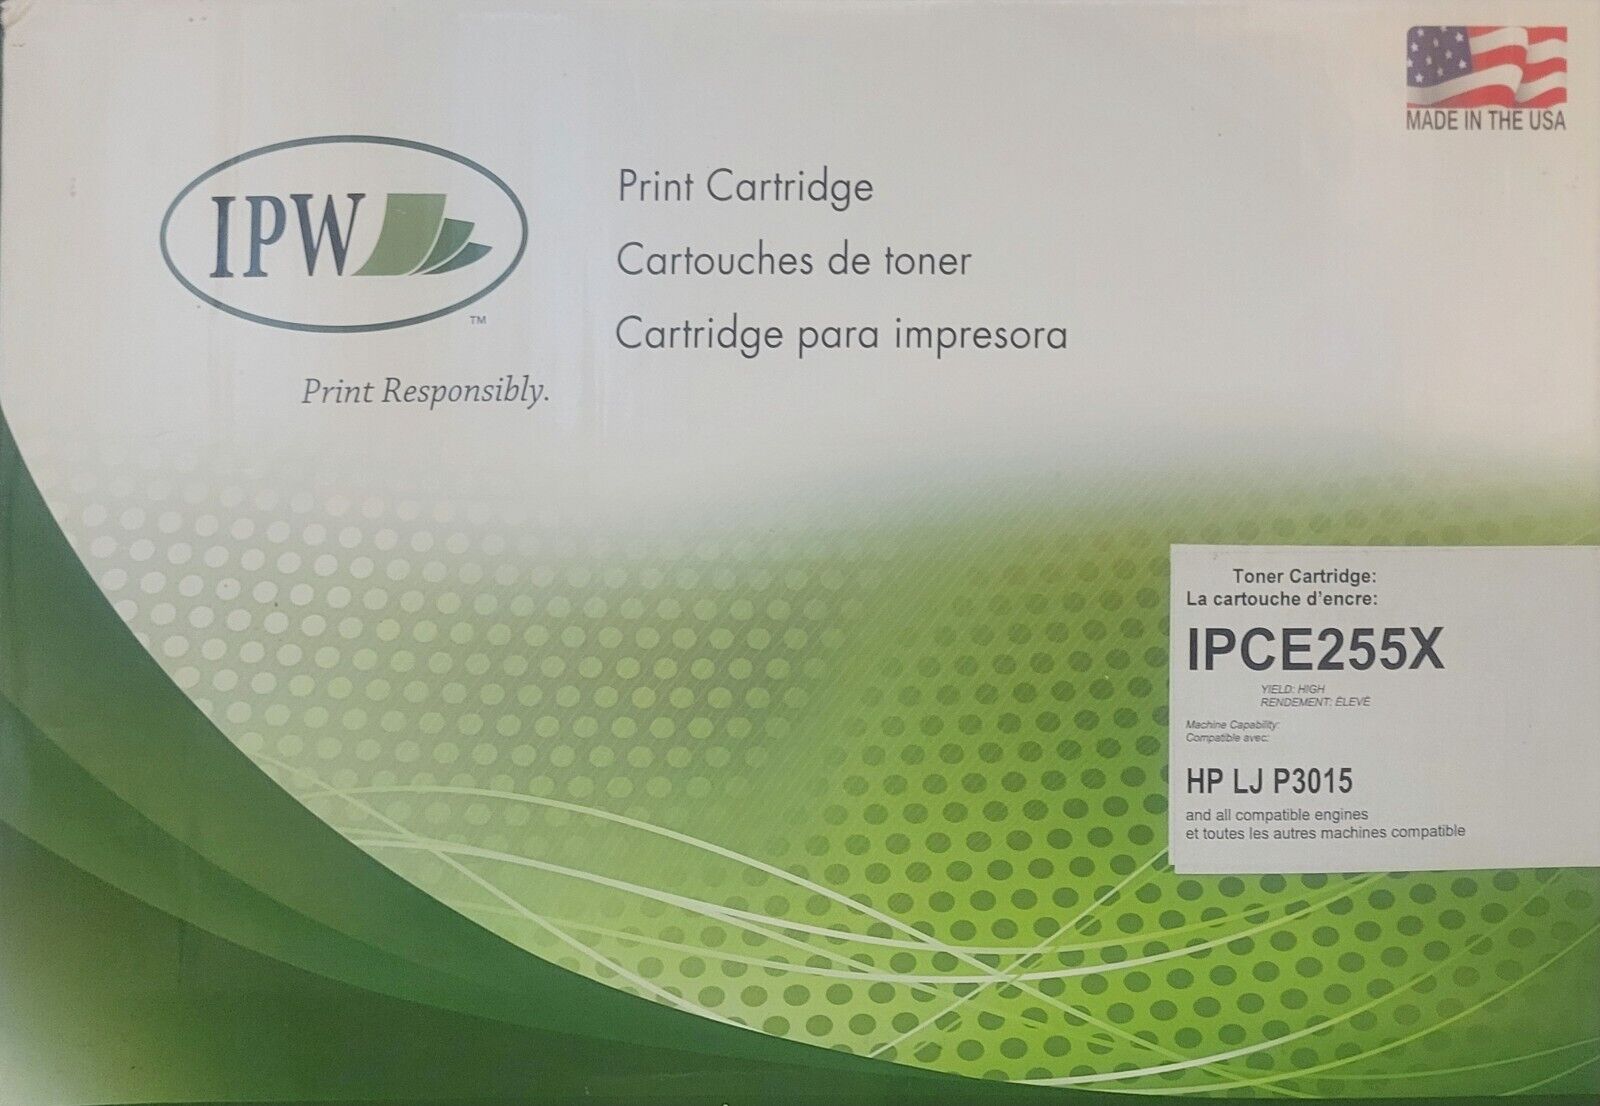 IPW IPCE255X(HP LJ P3015) Print Cartridge